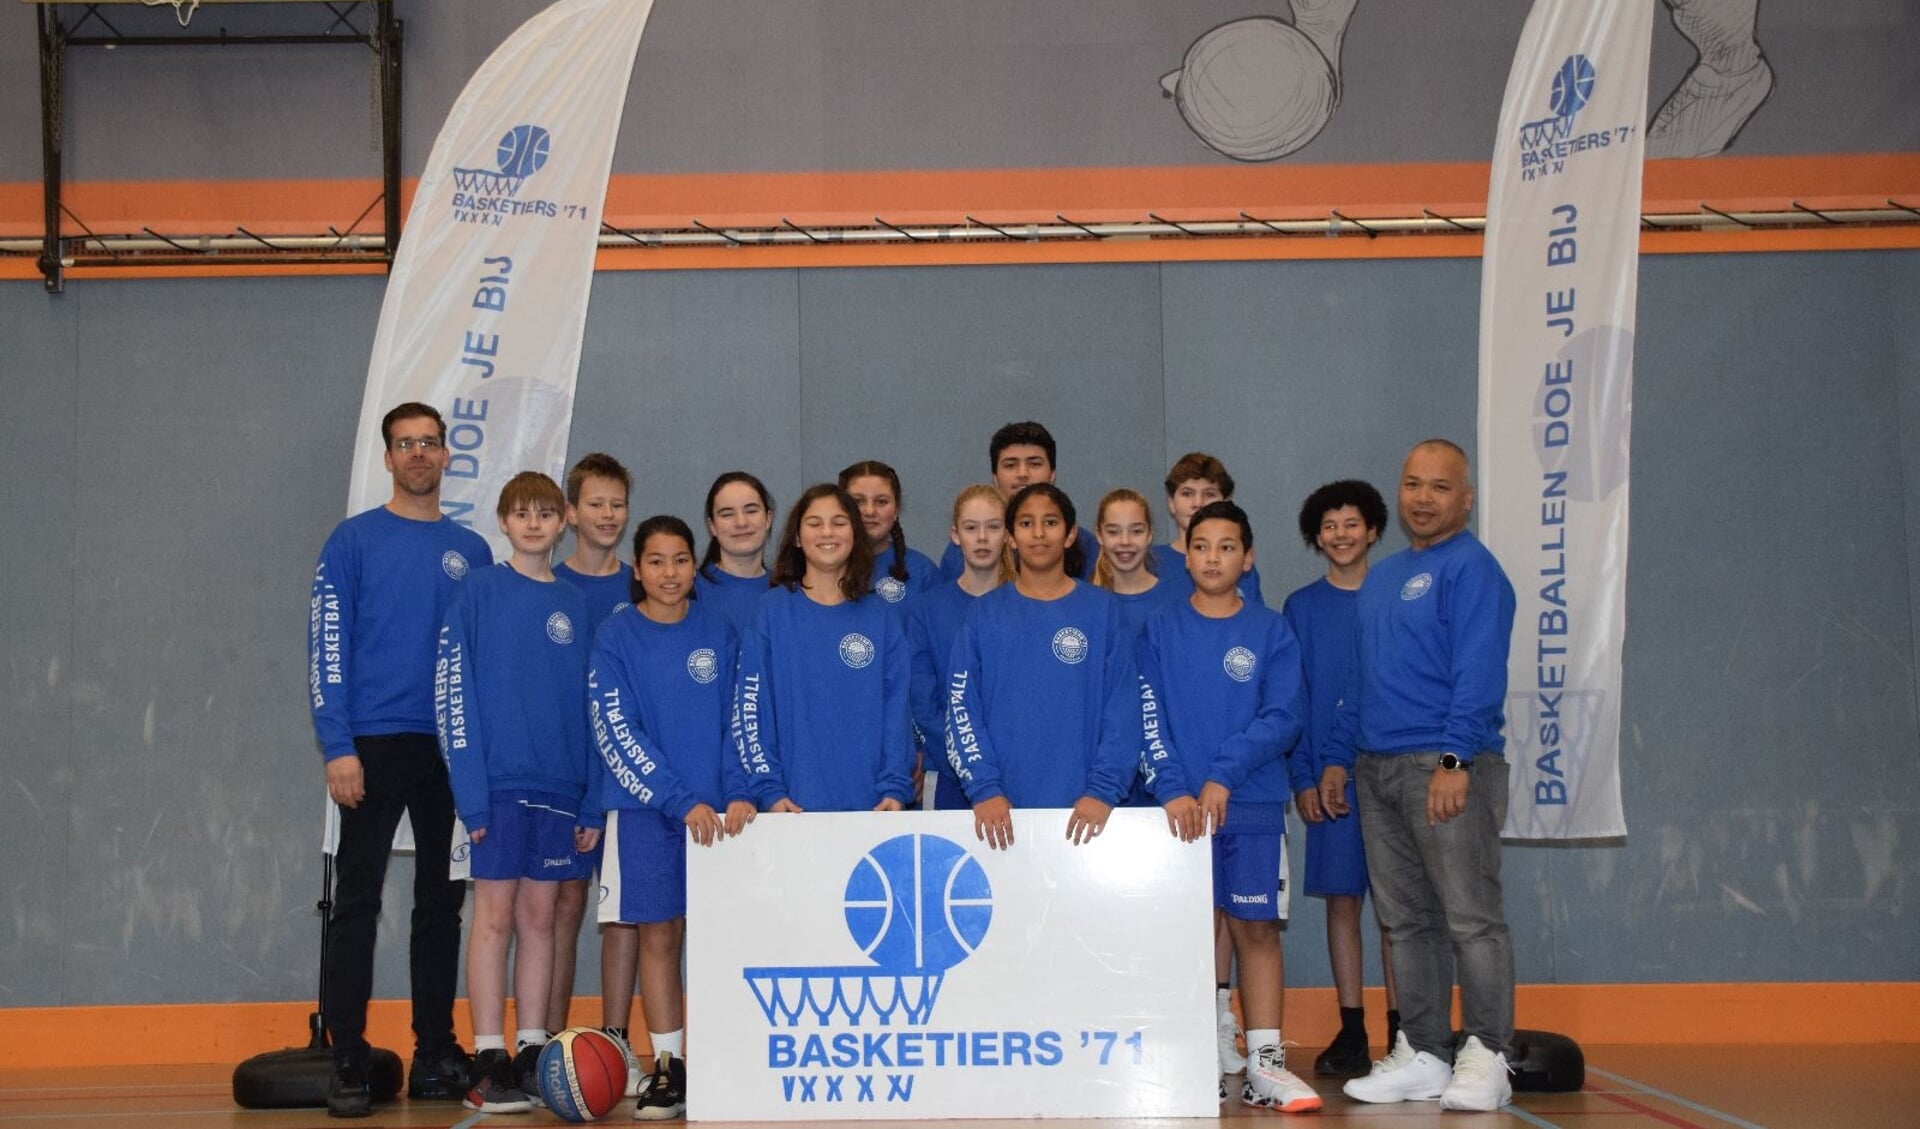 Kampioen U14 Basketiers ‘71